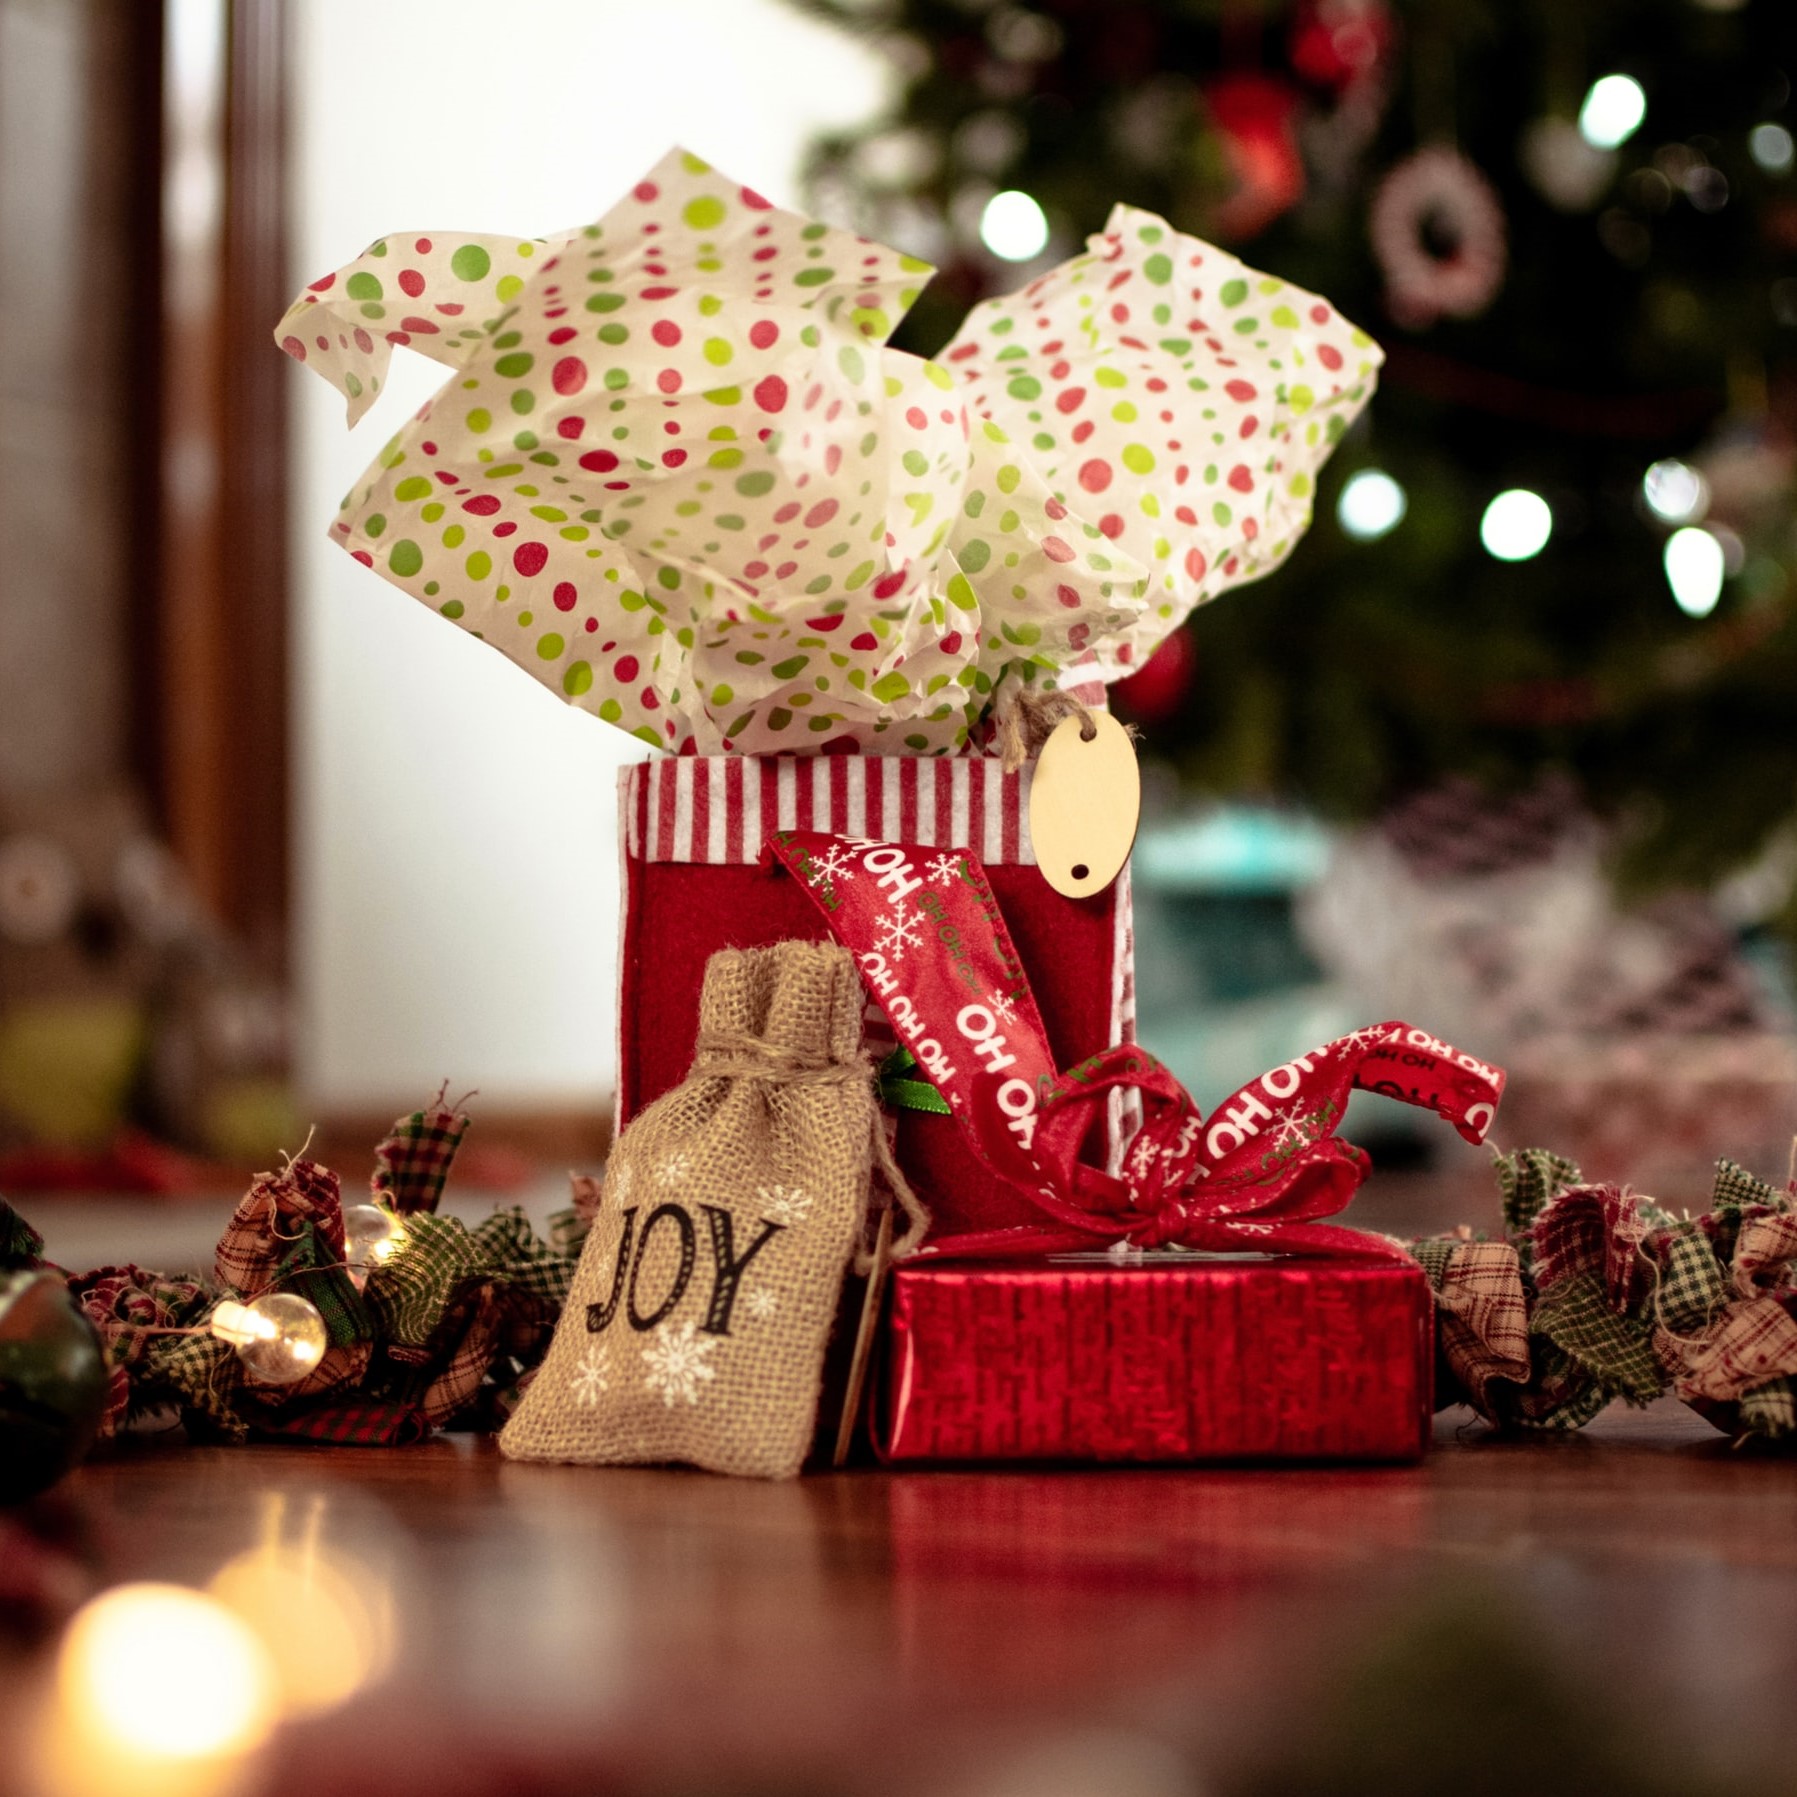 Susmans Biltong - The Christmas Gift Guide